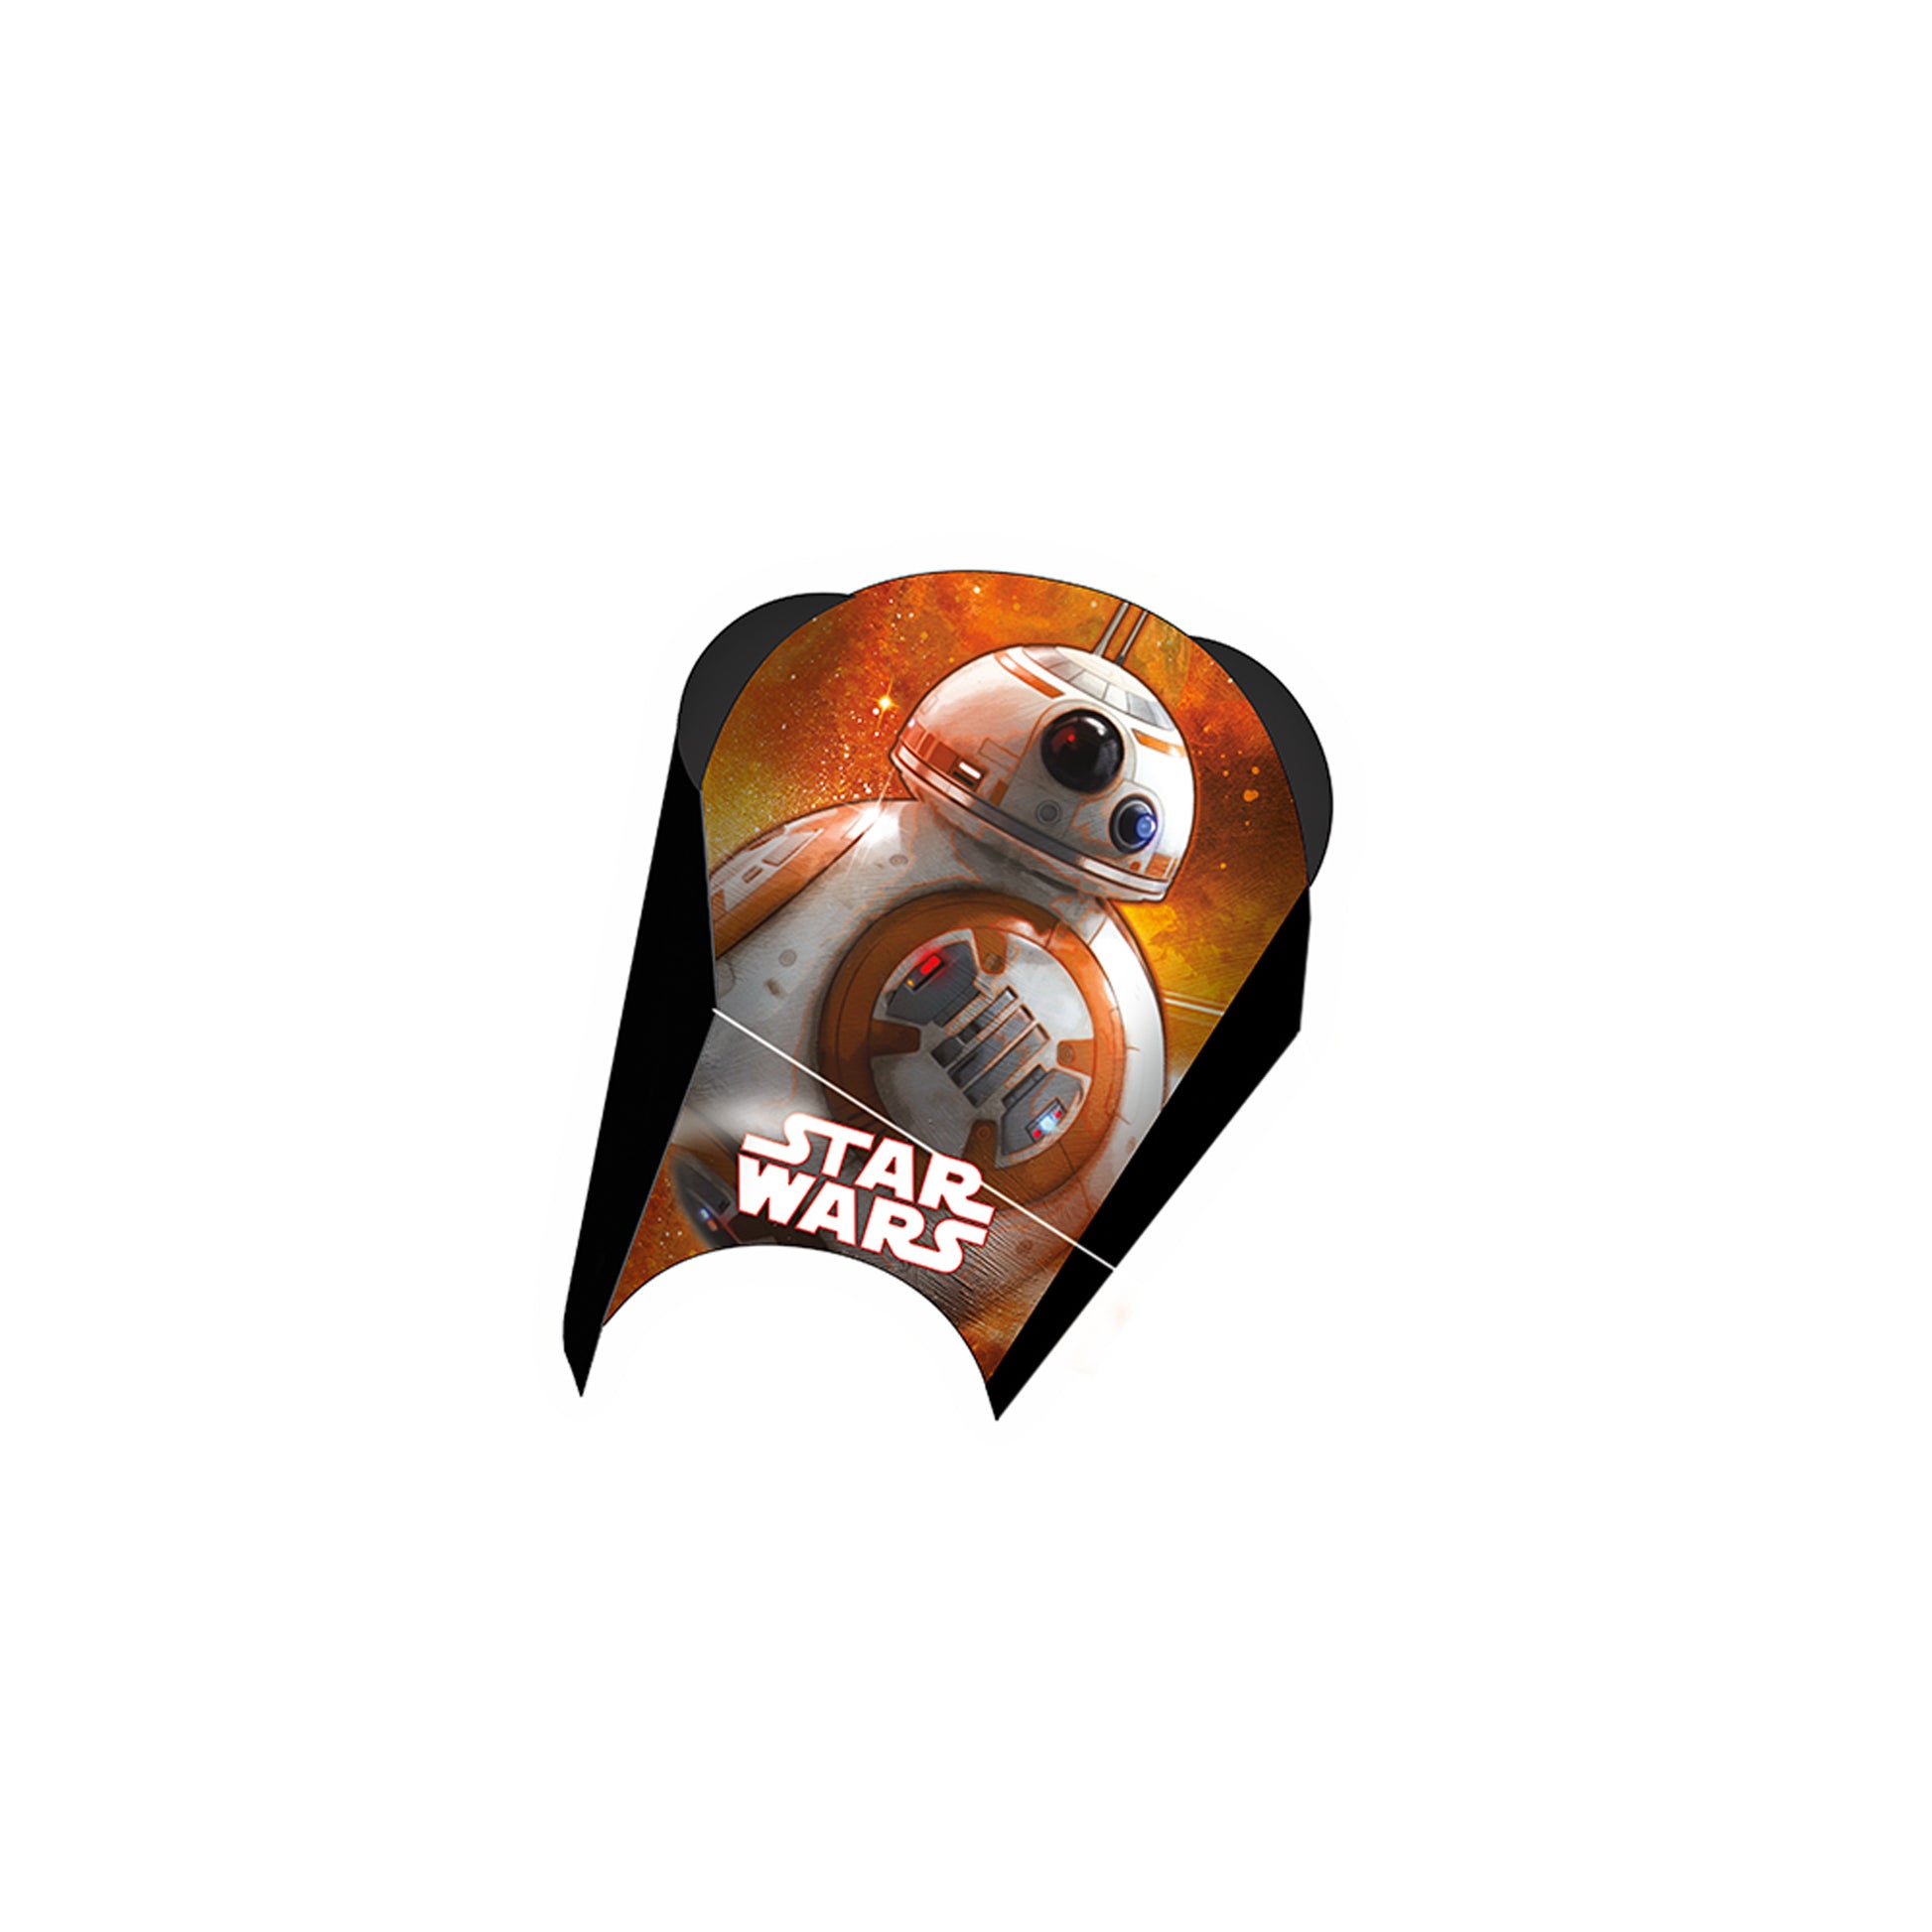 X Kites Star Wars Pocket Kites Product Image